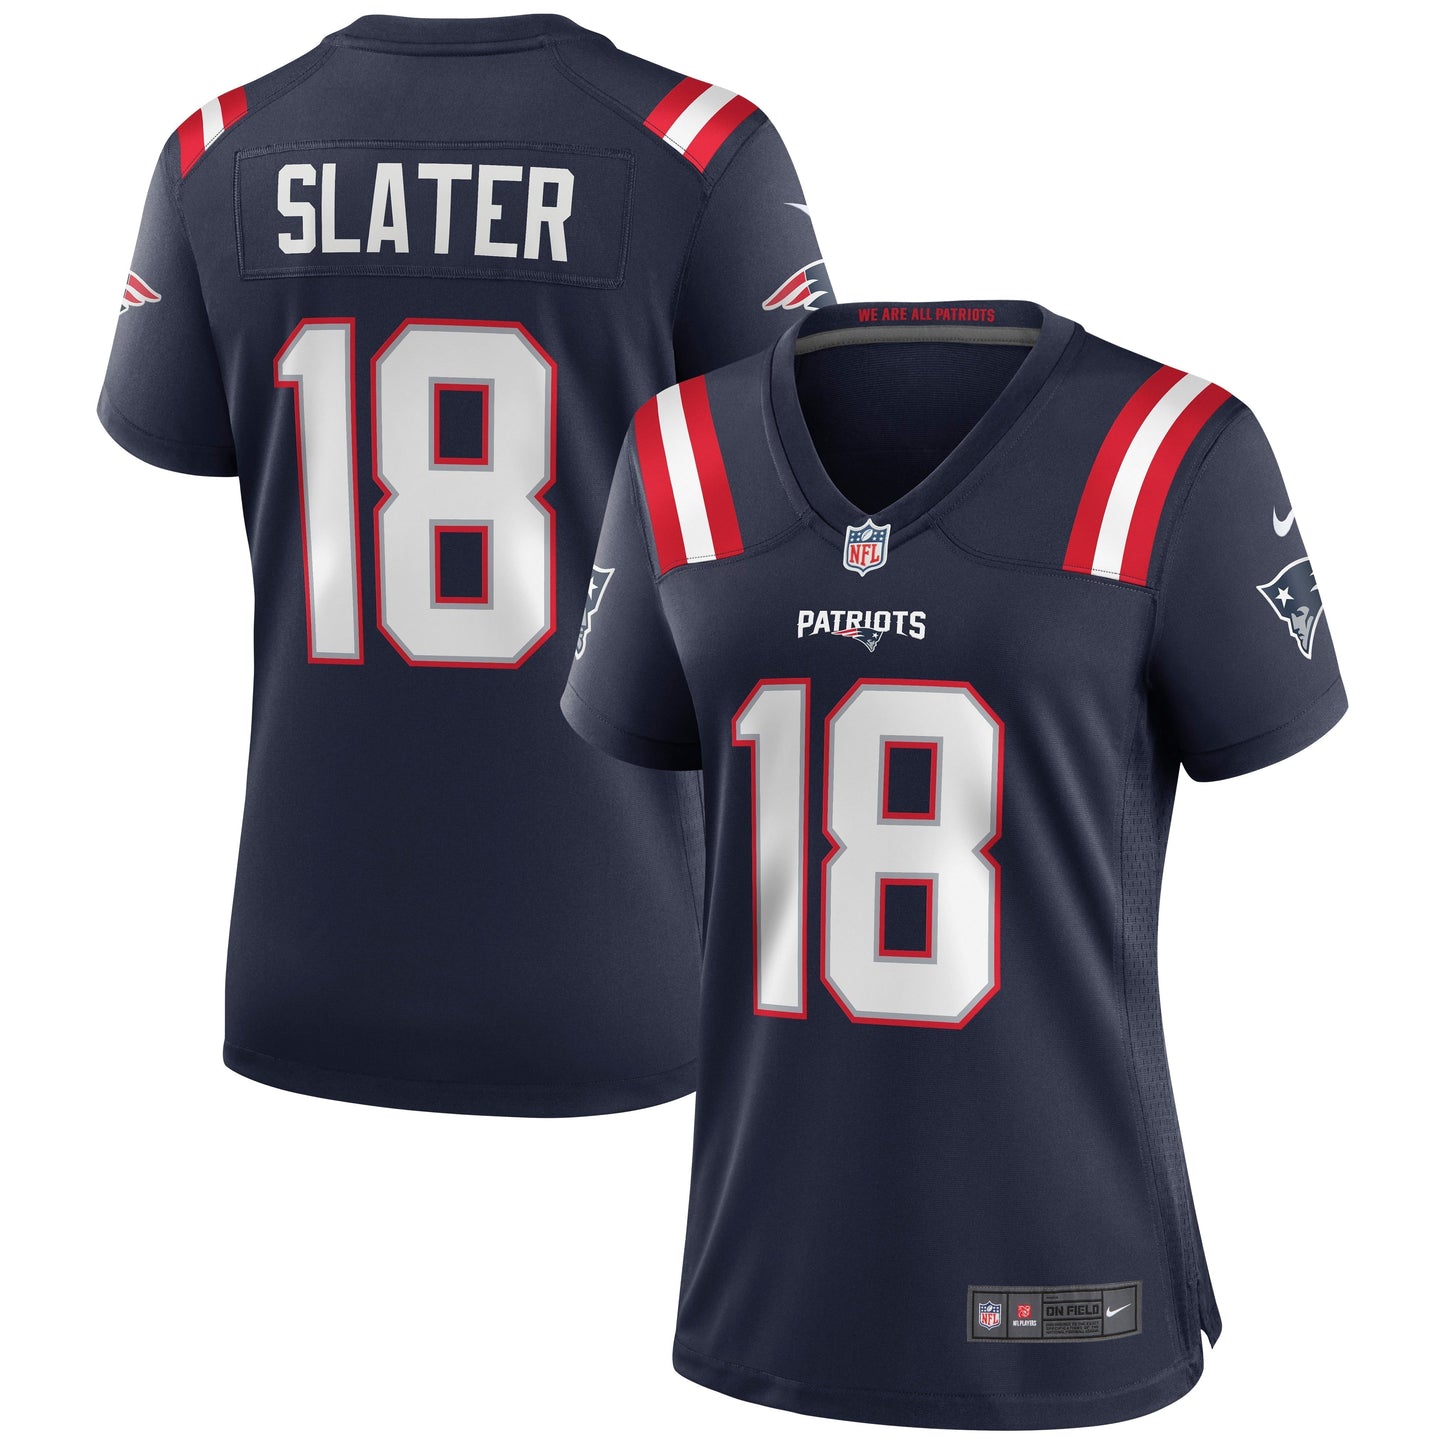 Women's Nike Matthew Slater Navy New England Patriots Game Jersey